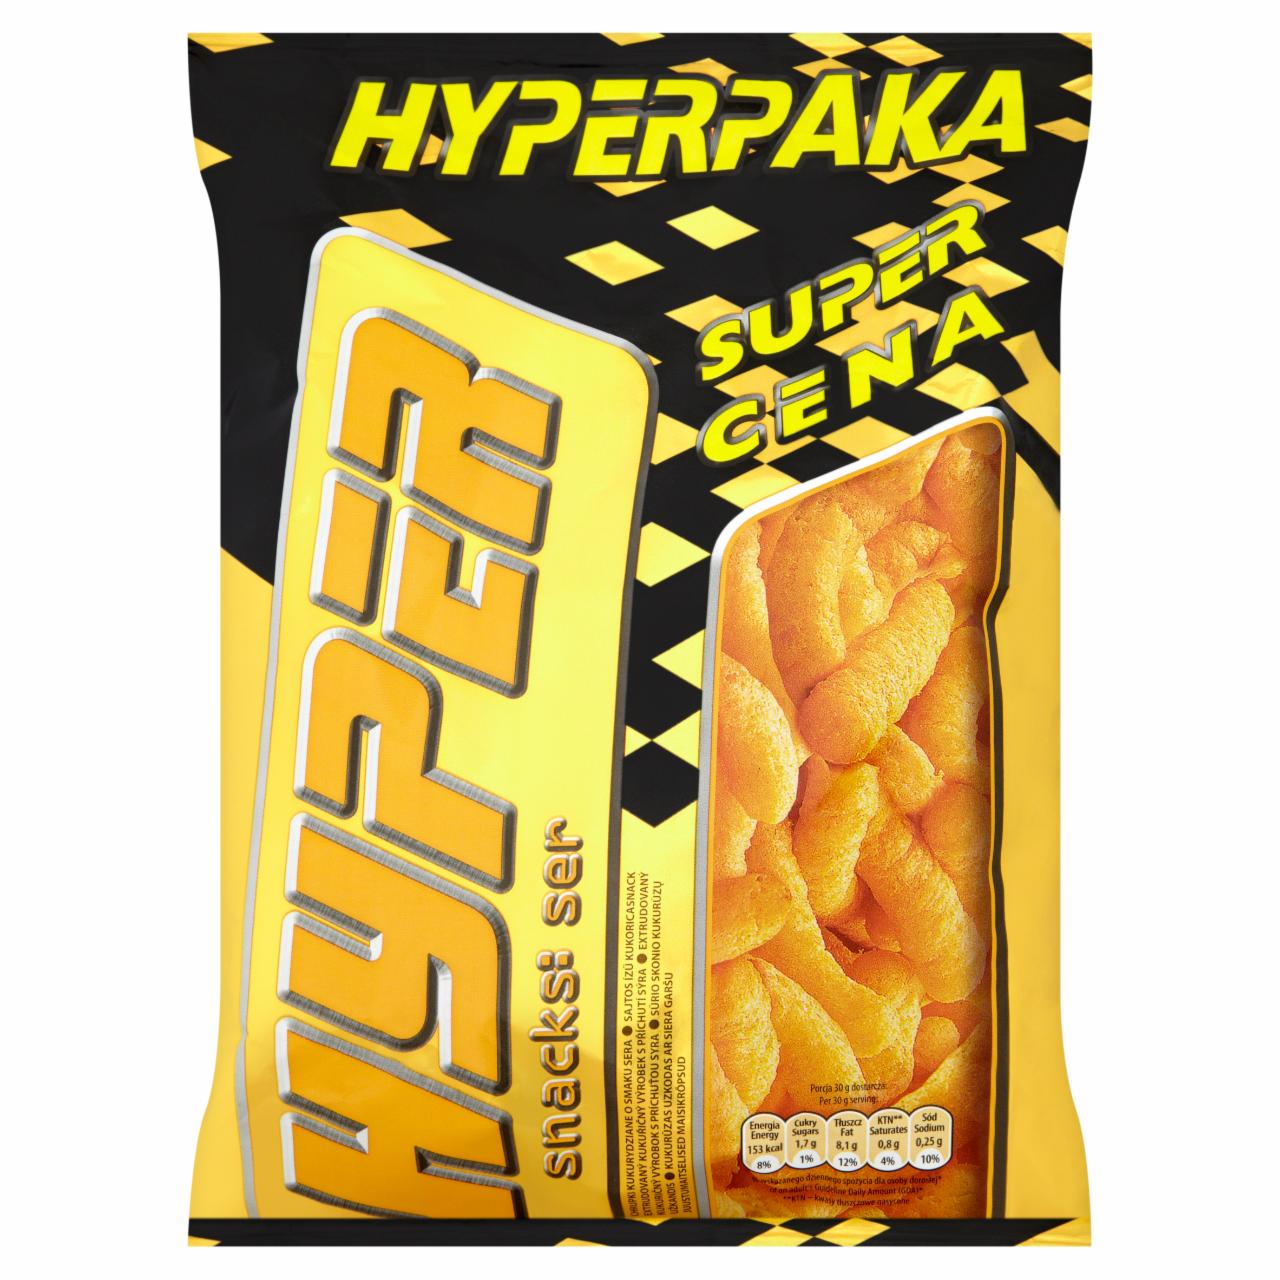 Zdjęcia - Hyper snacks ser Chrupki kukurydziane 100 g